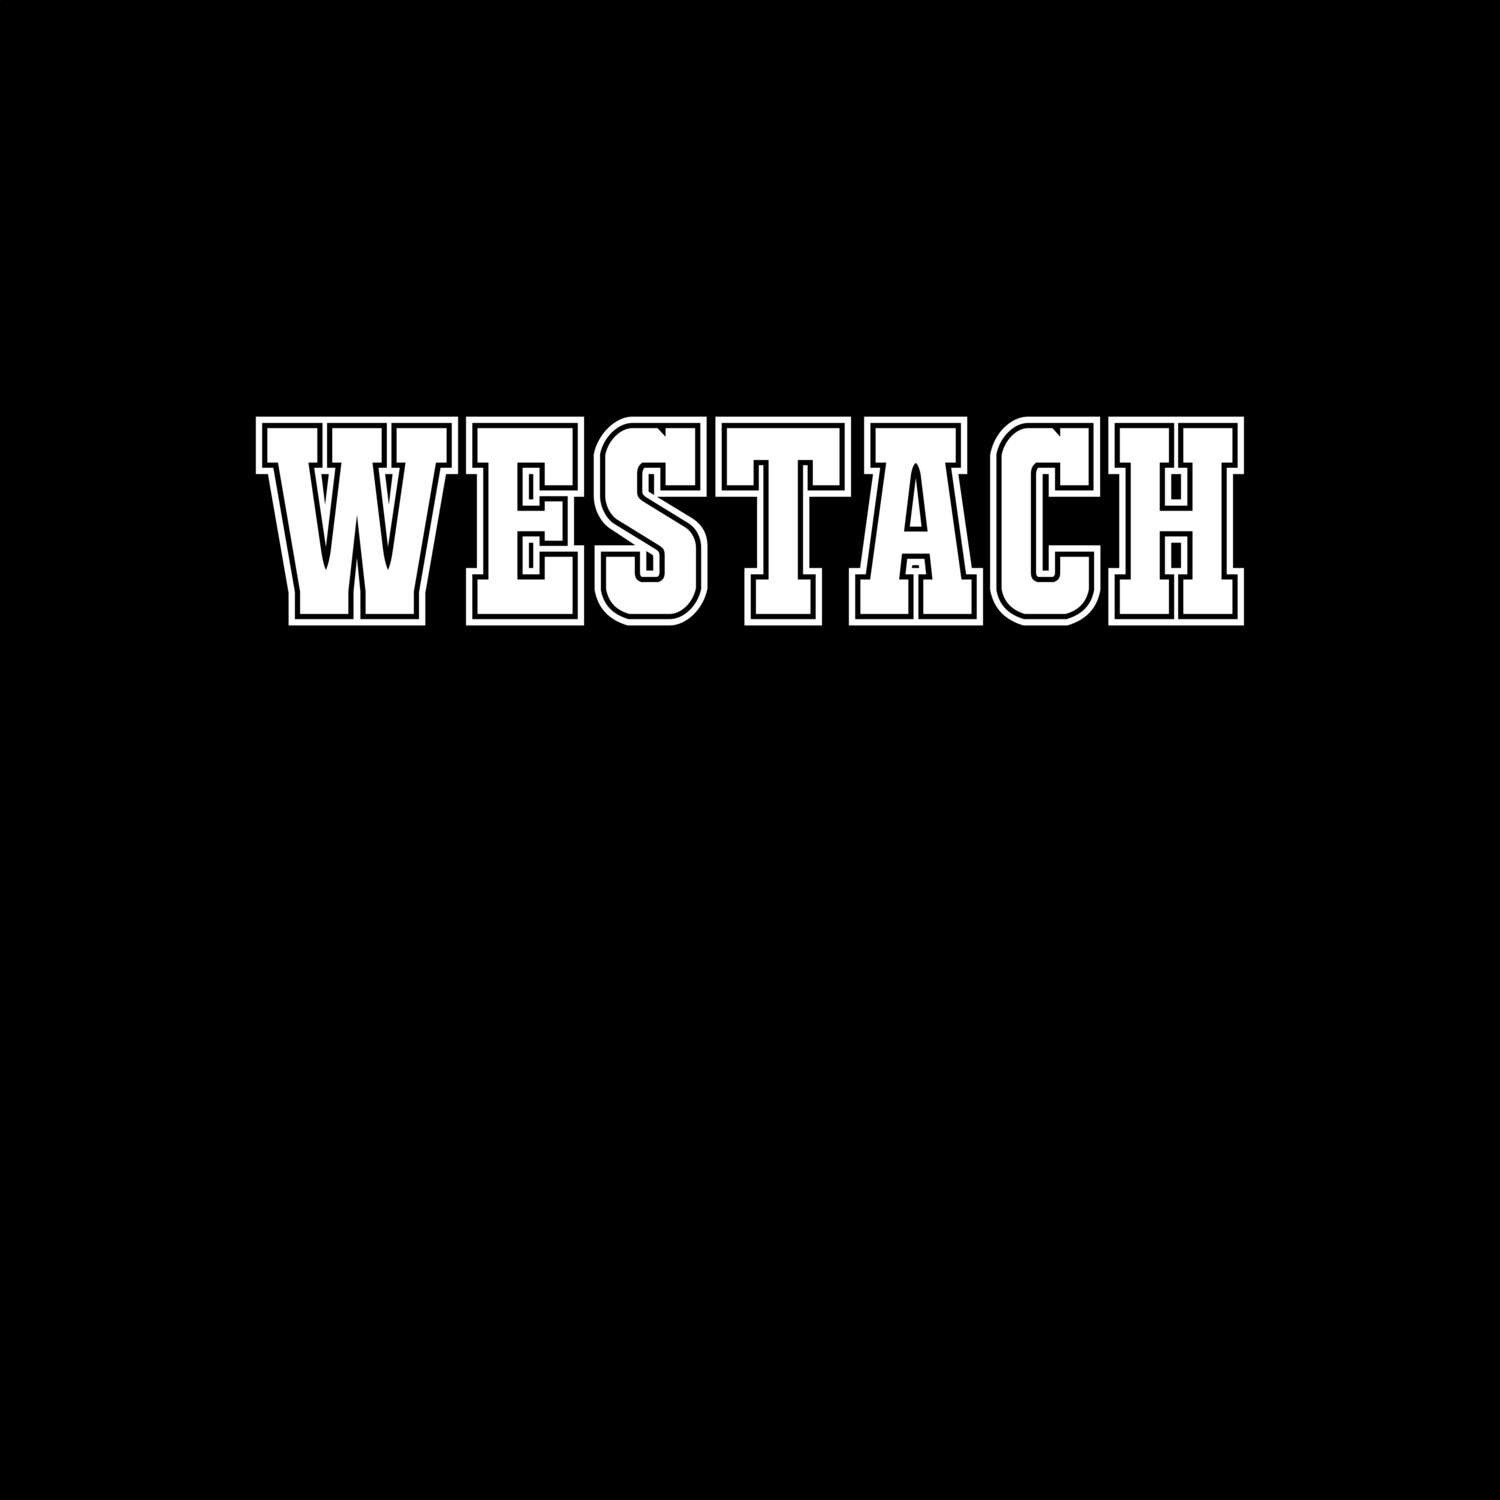 Westach T-Shirt »Classic«